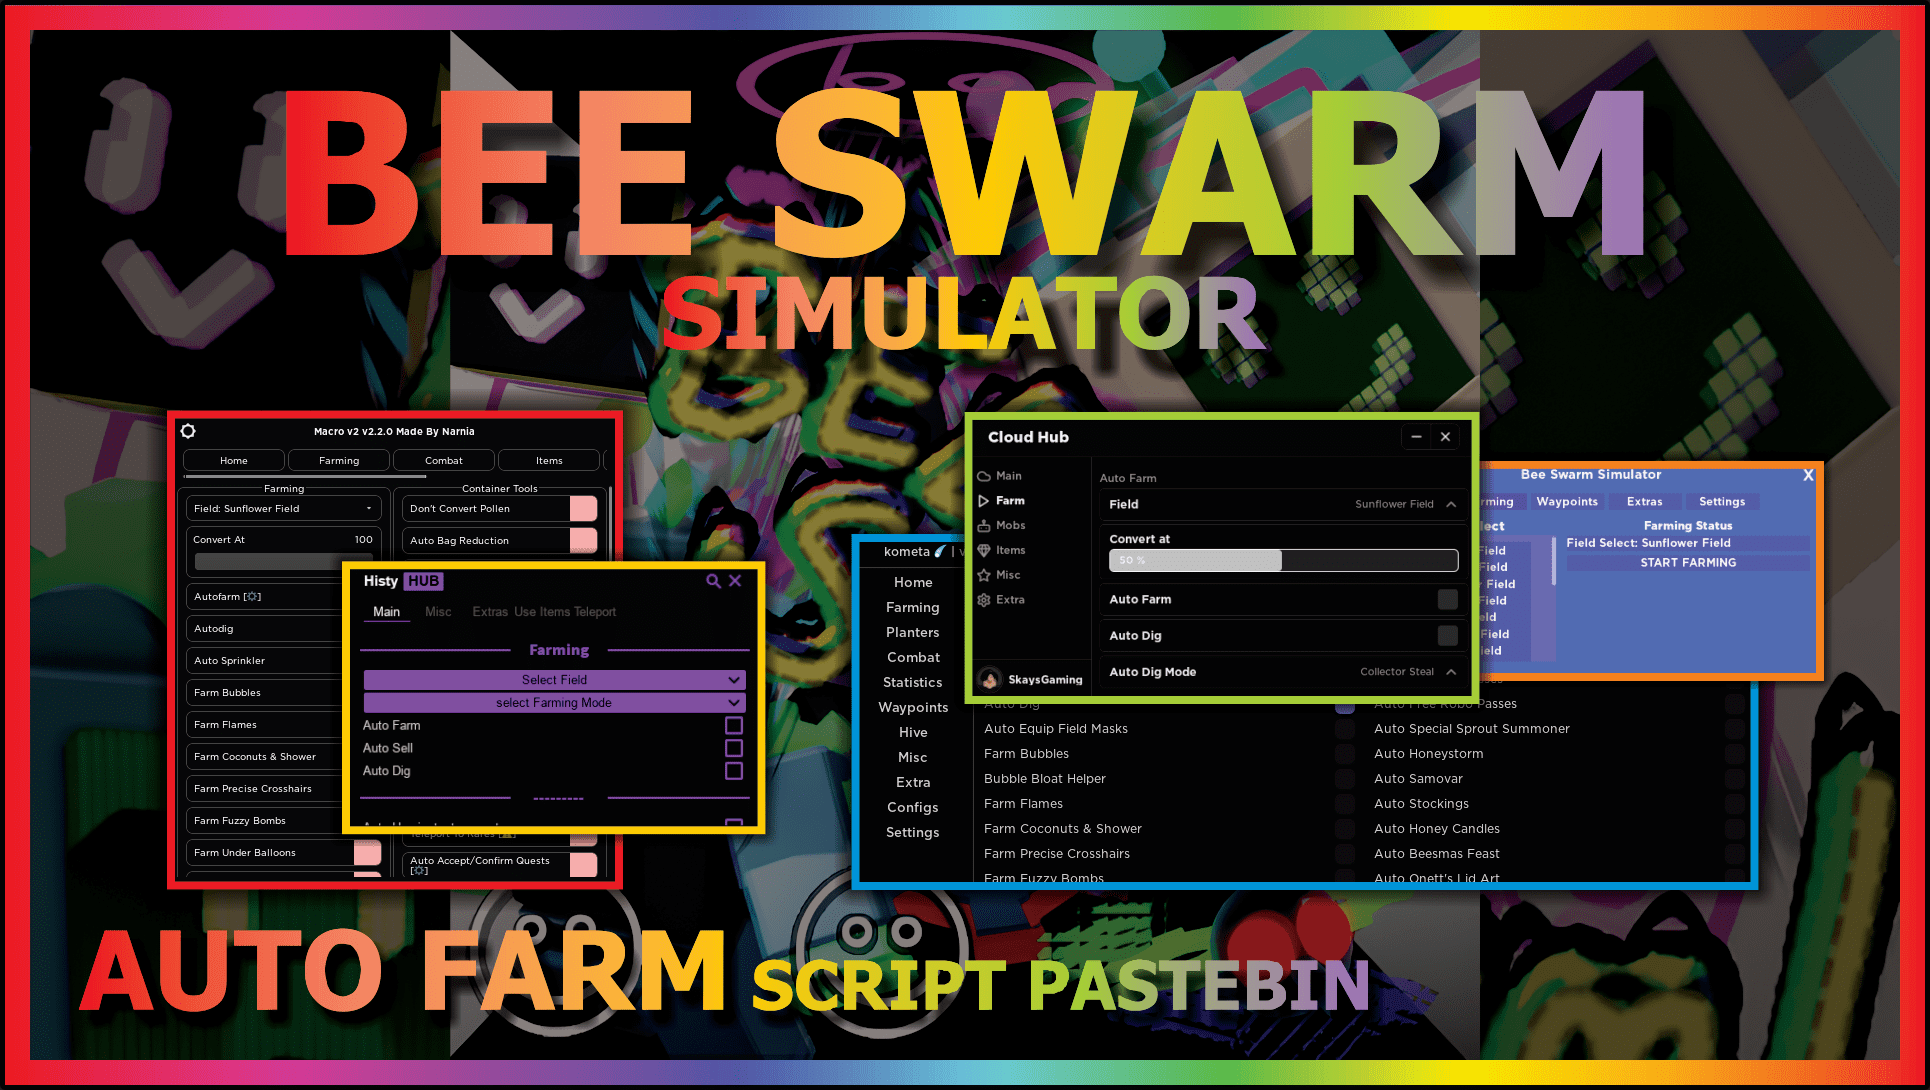 bee-swarm-simulator-auto-farm-scriptpastebin